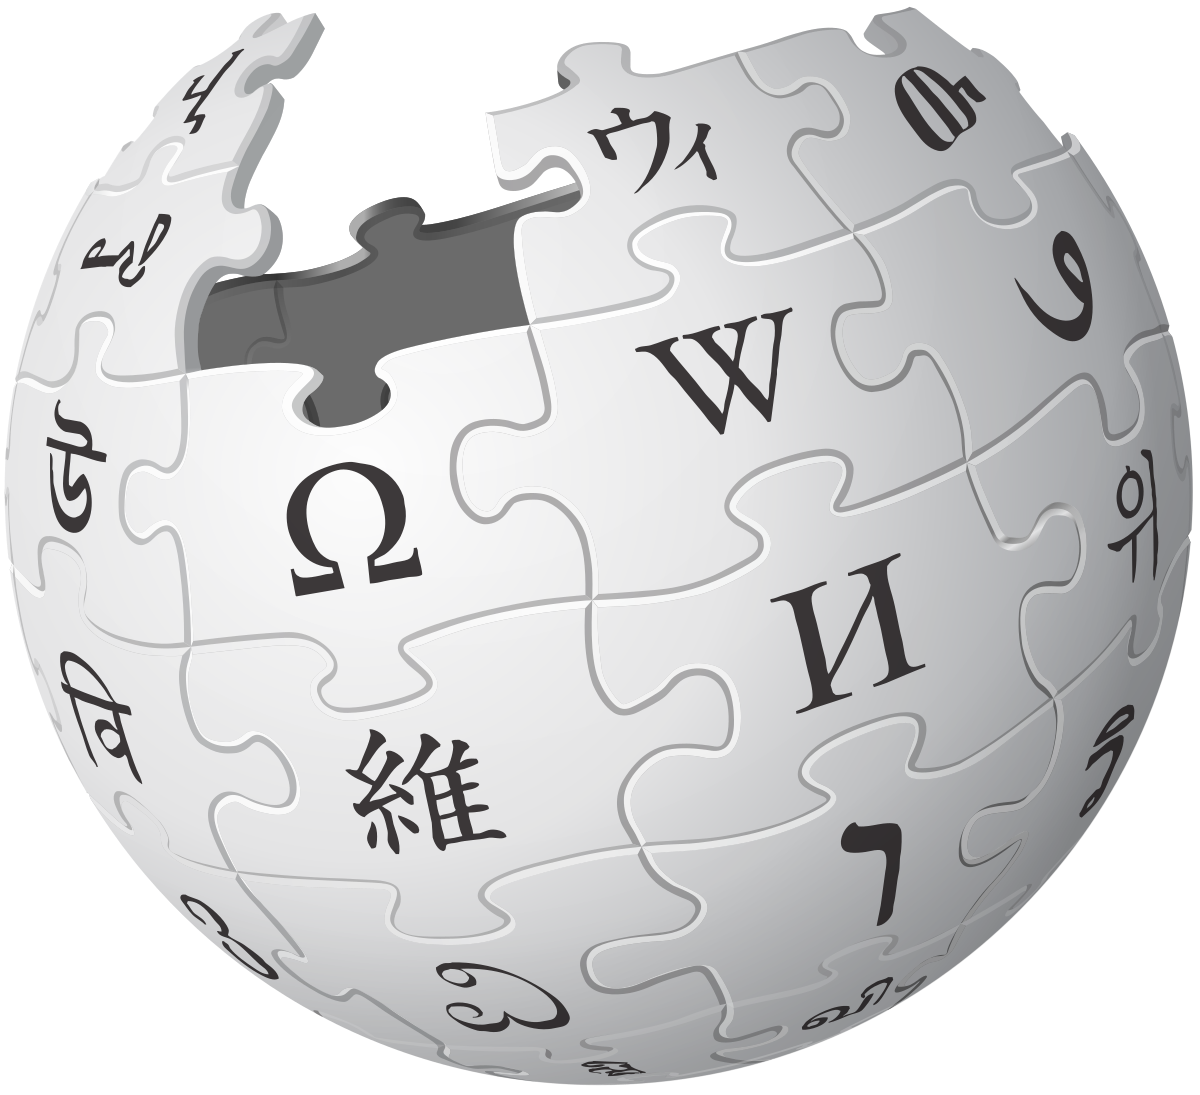 Wikipedia PNG-PlusPNG.com-800